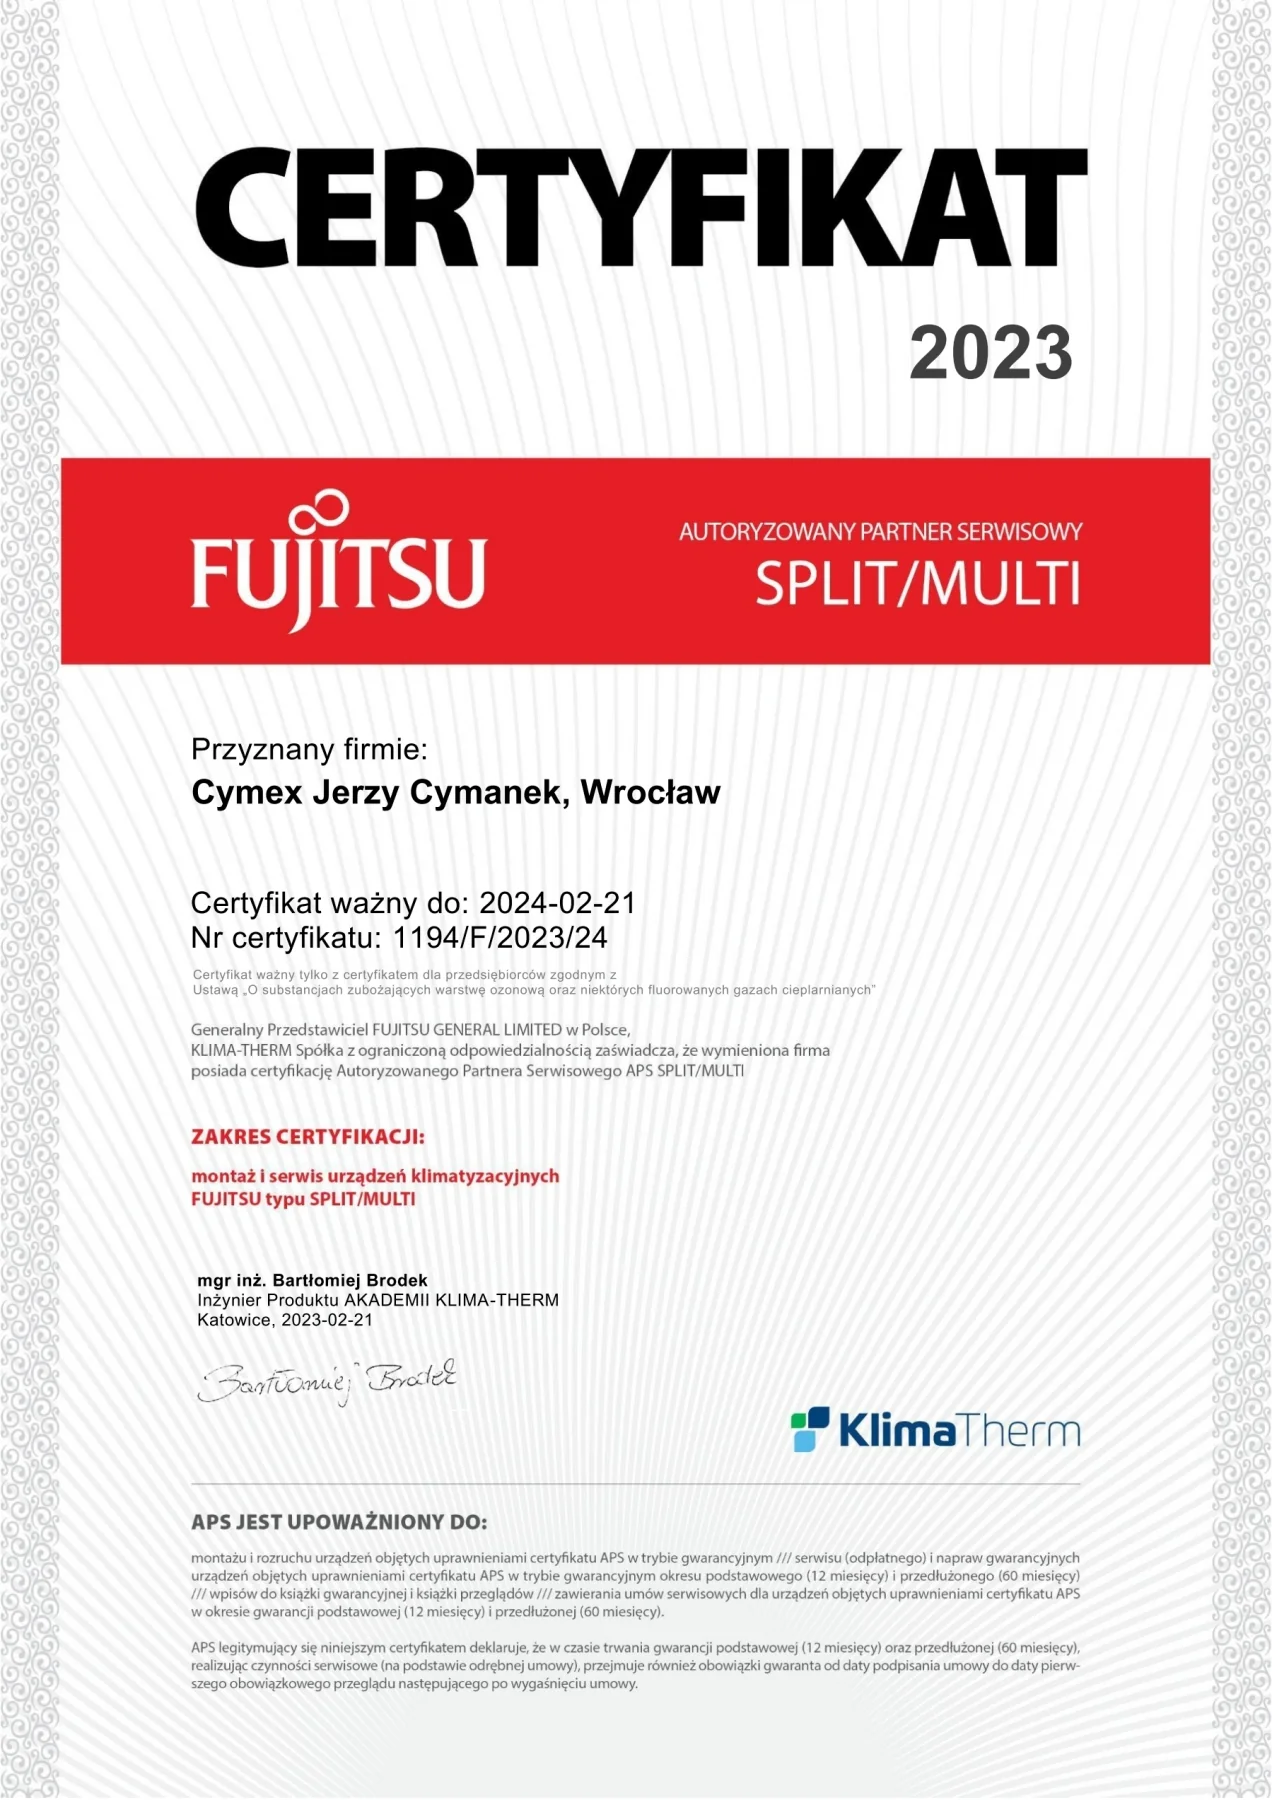 Certyfikat FUJITSU 2023